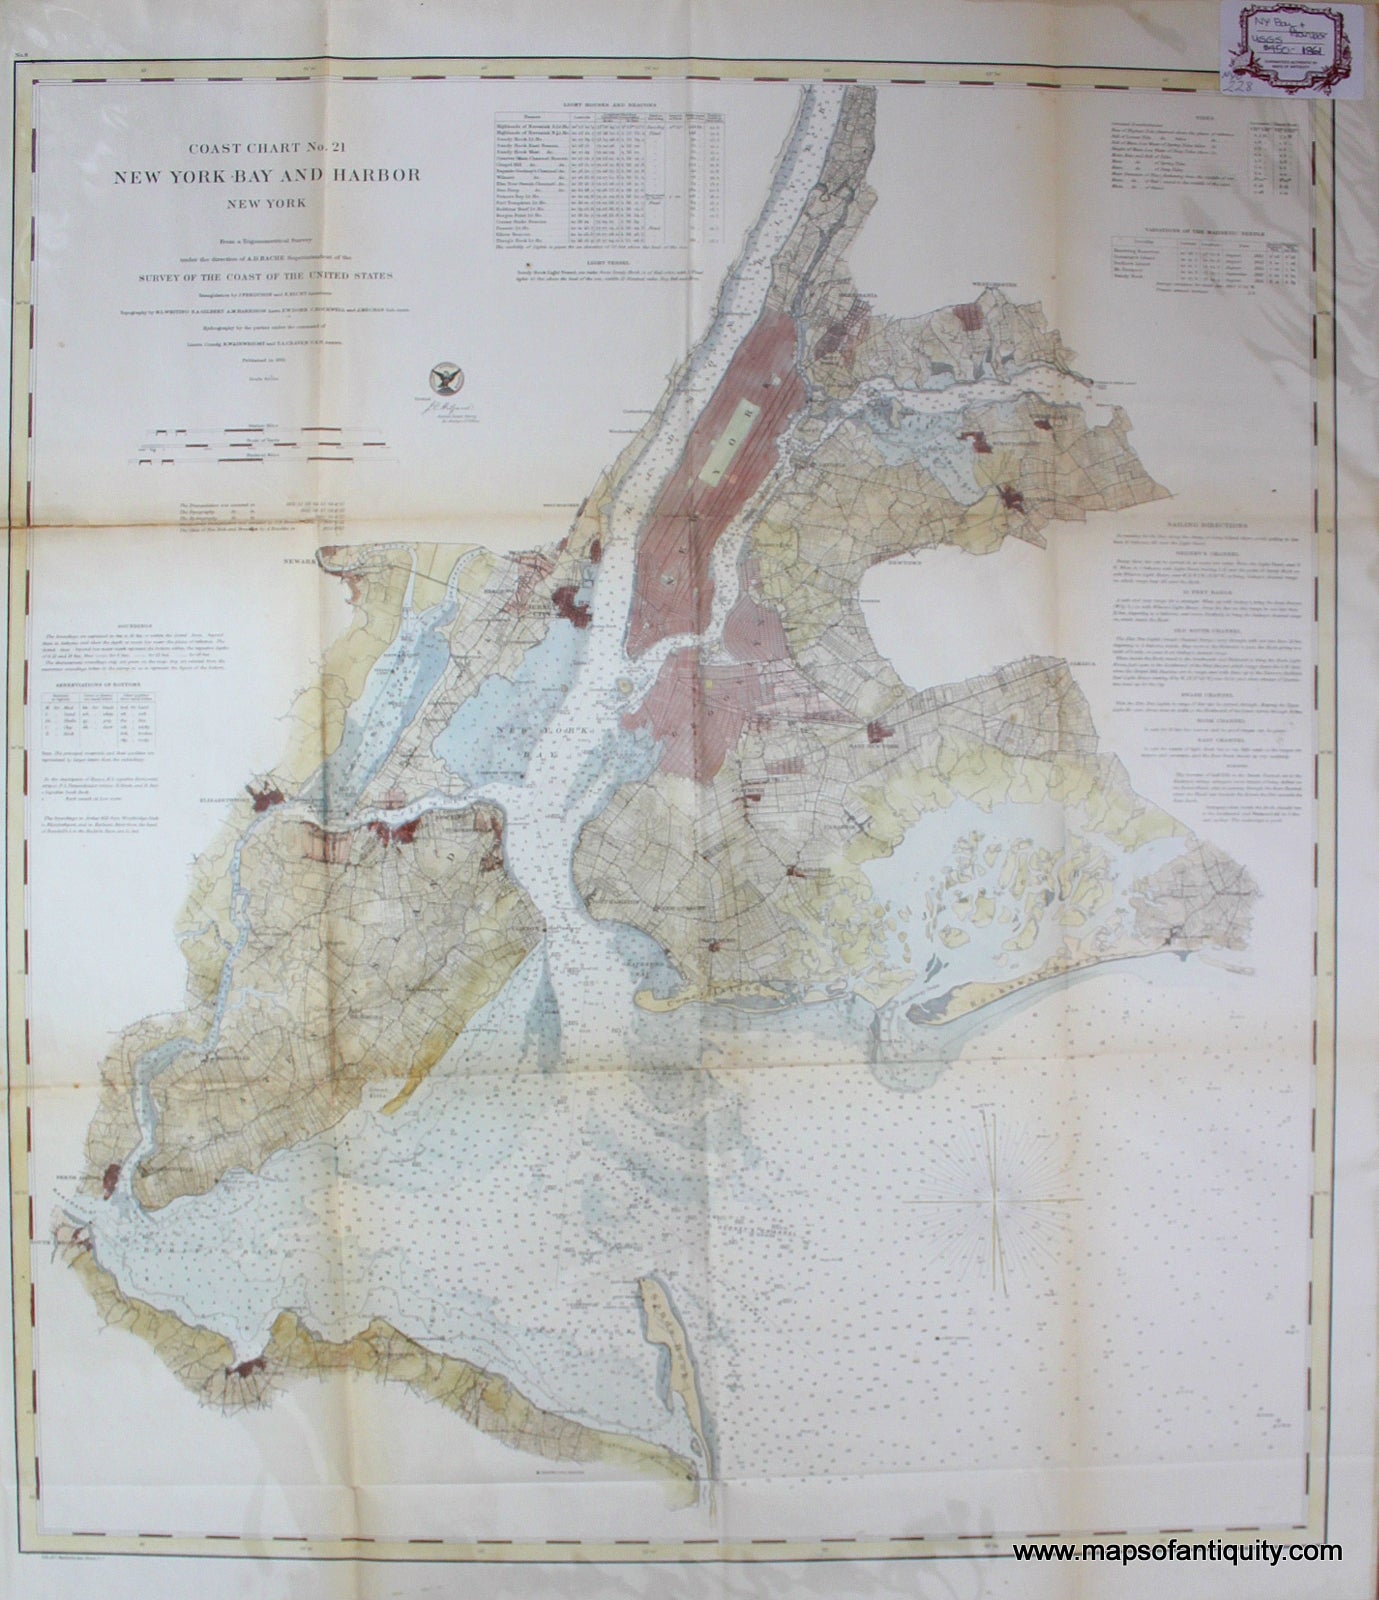 Hand-Colored-Antique-Coastal-Charg-Coast-Chart-No.-21-New-York-and-Harbor**********-New-York-City-Antique-Nautical-Charts-1861-U.S.-Coast-Survey-Maps-Of-Antiquity